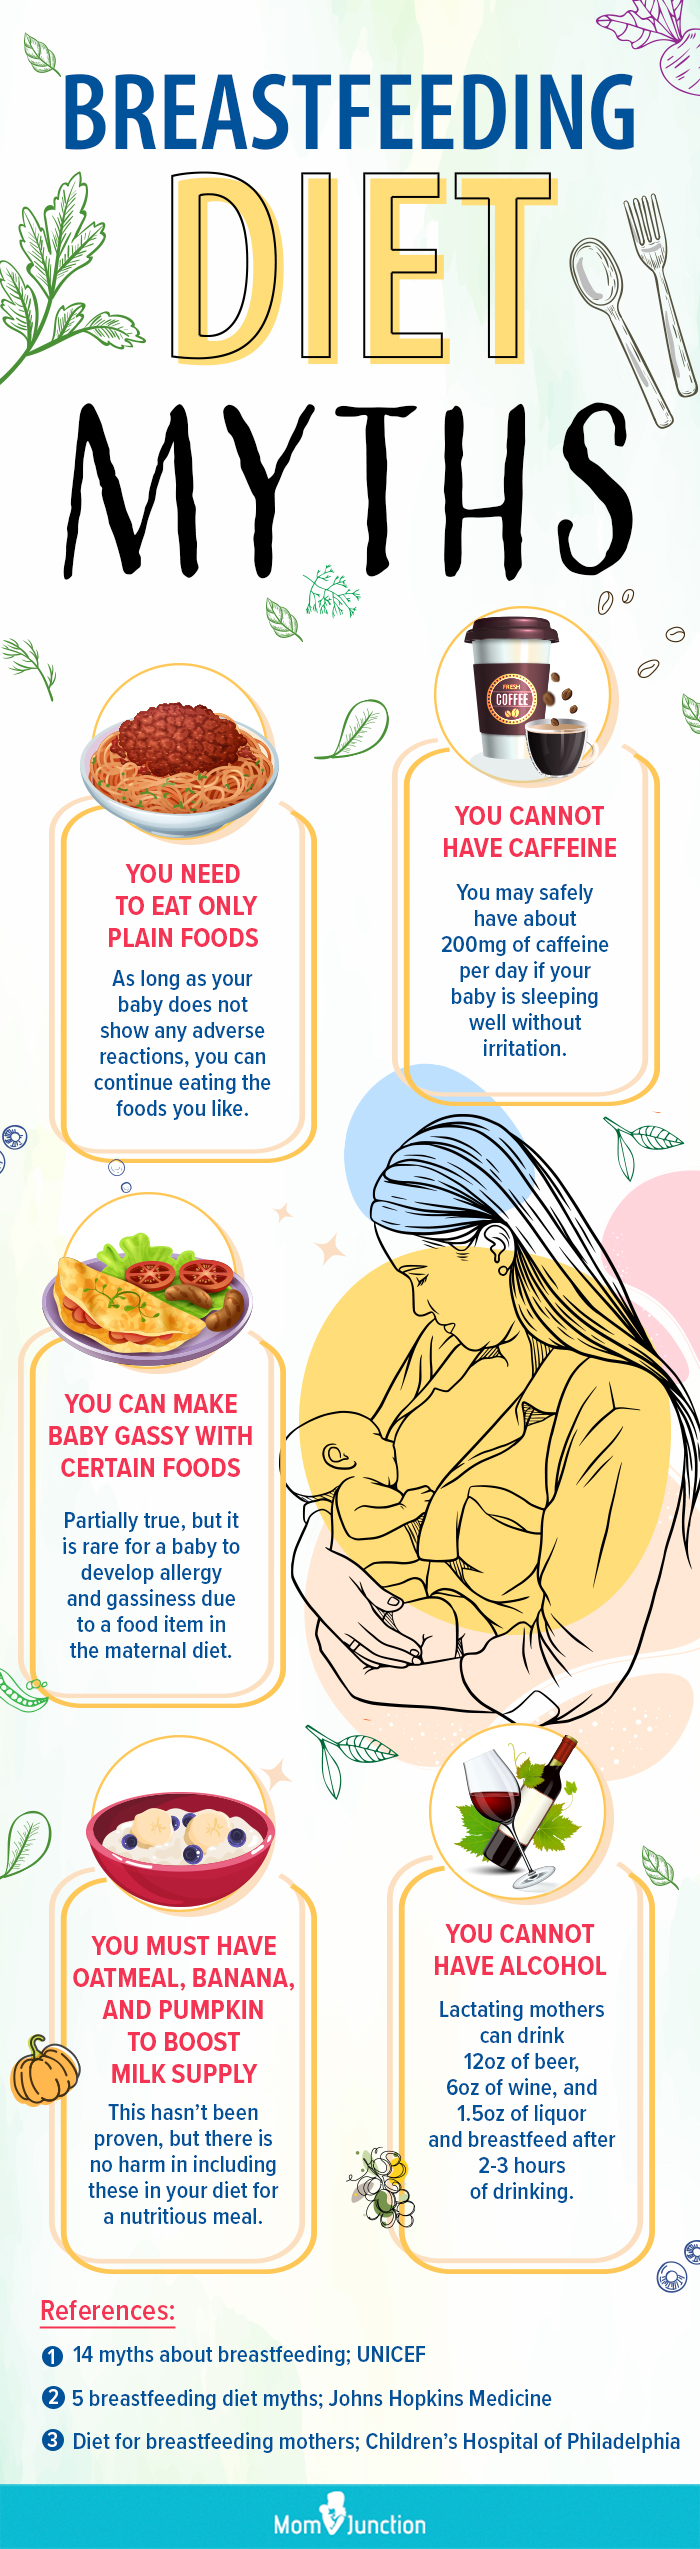 breastfeeding diet myths [infographic]